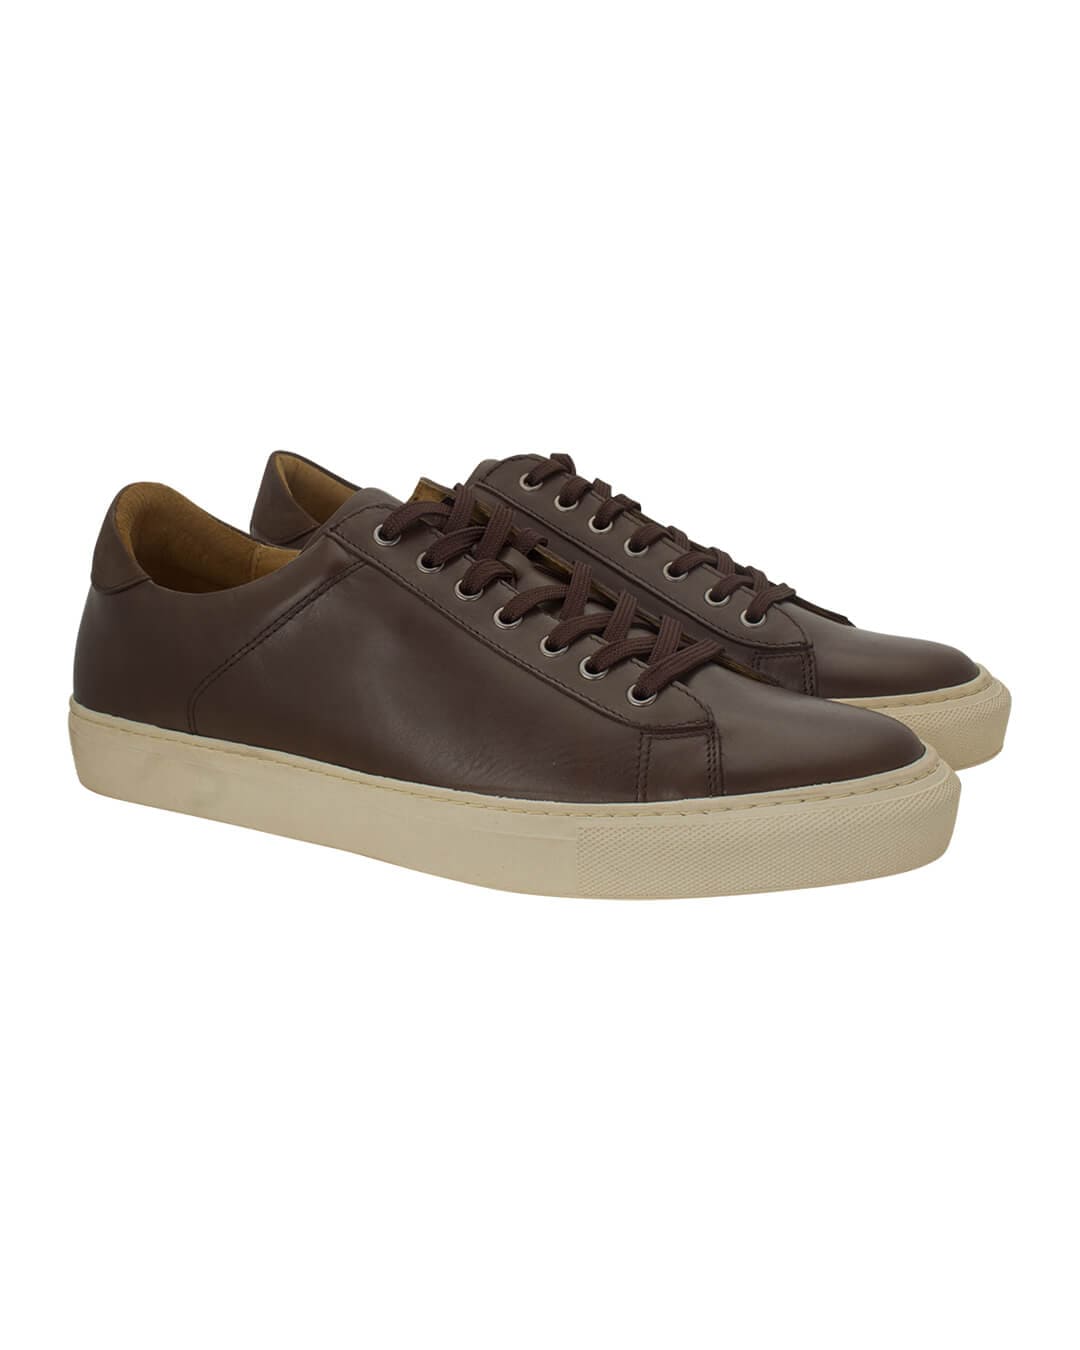 Gagliardi Shoes Gagliardi Brown calf leather sport shoes